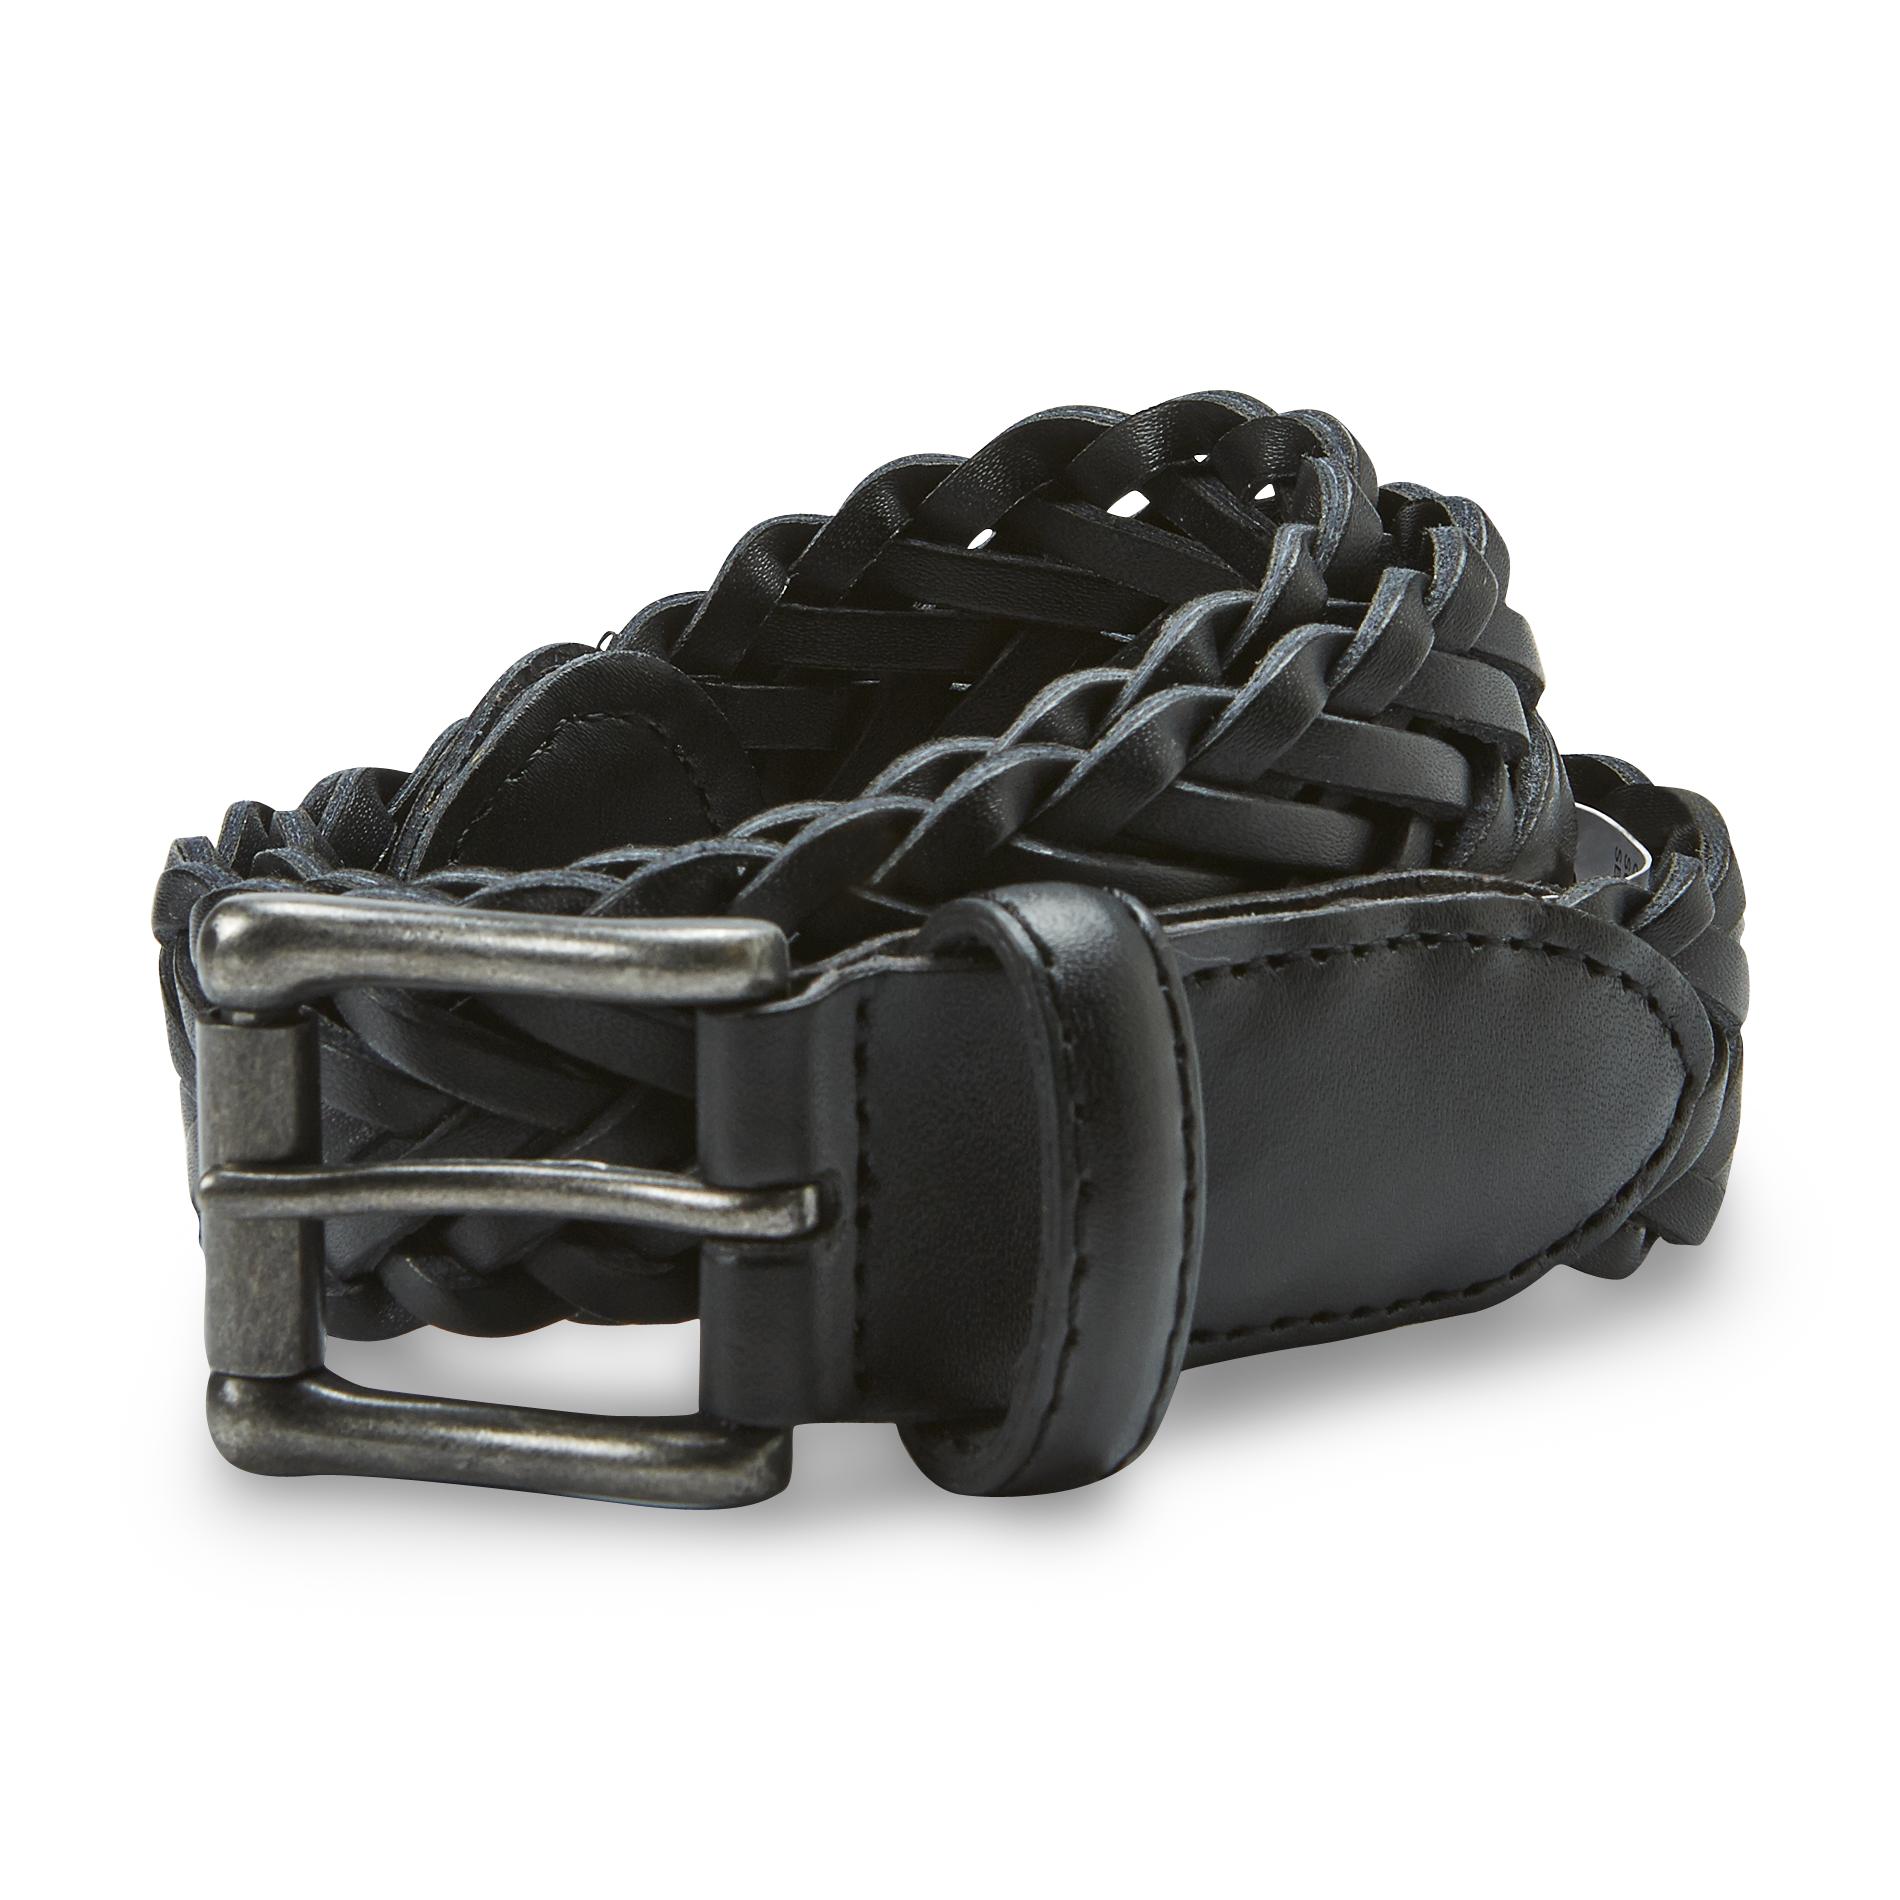 Basic Editions Boy's Braided Leather Belt